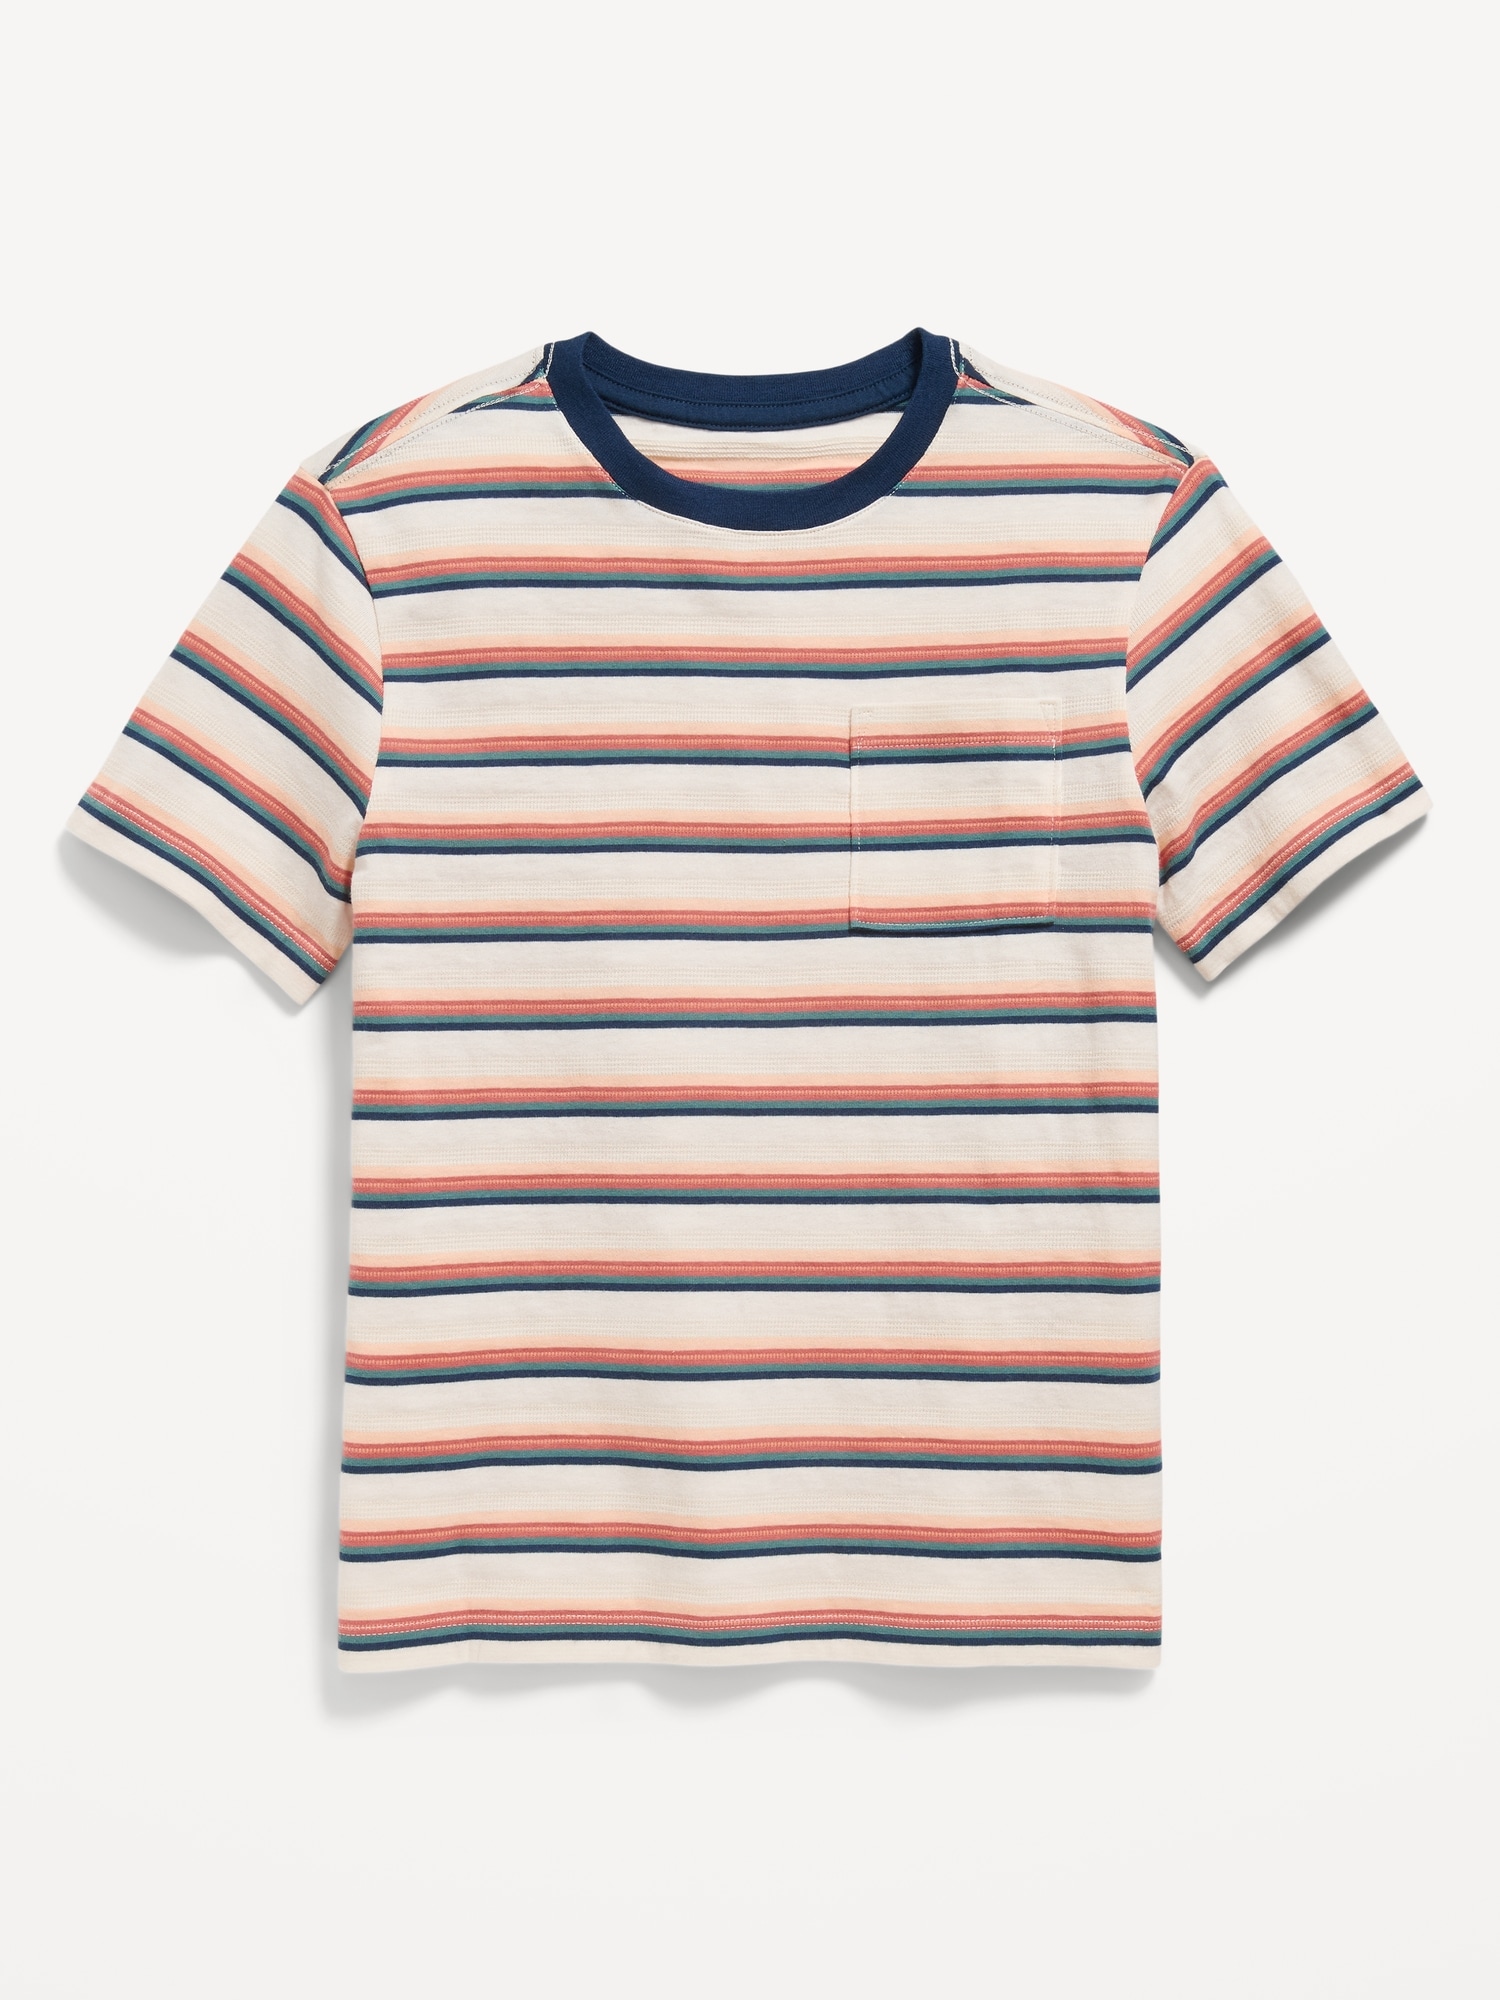 Textured Striped Short-Sleeve Pocket T-Shirt for Boys Hot Deal